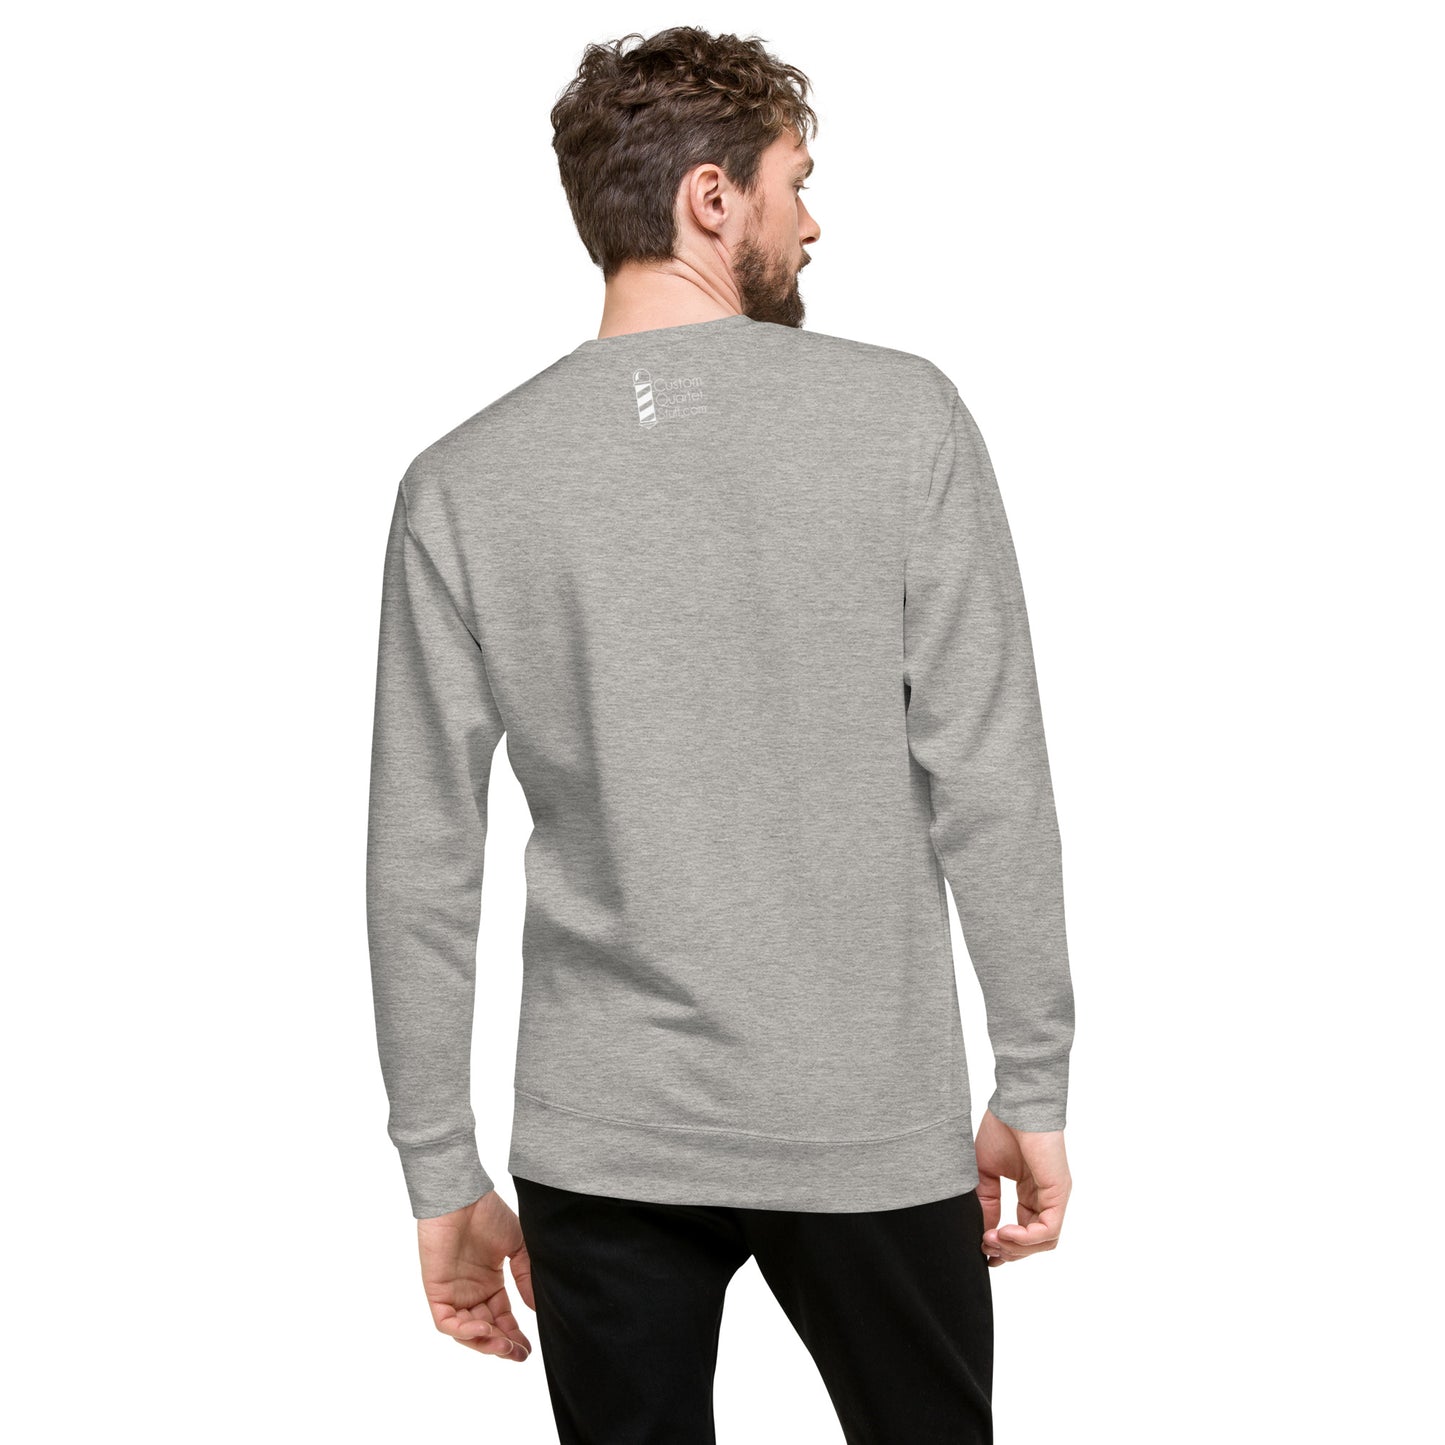 SHD Printed - Regular fit Unisex Premium Sweatshirt